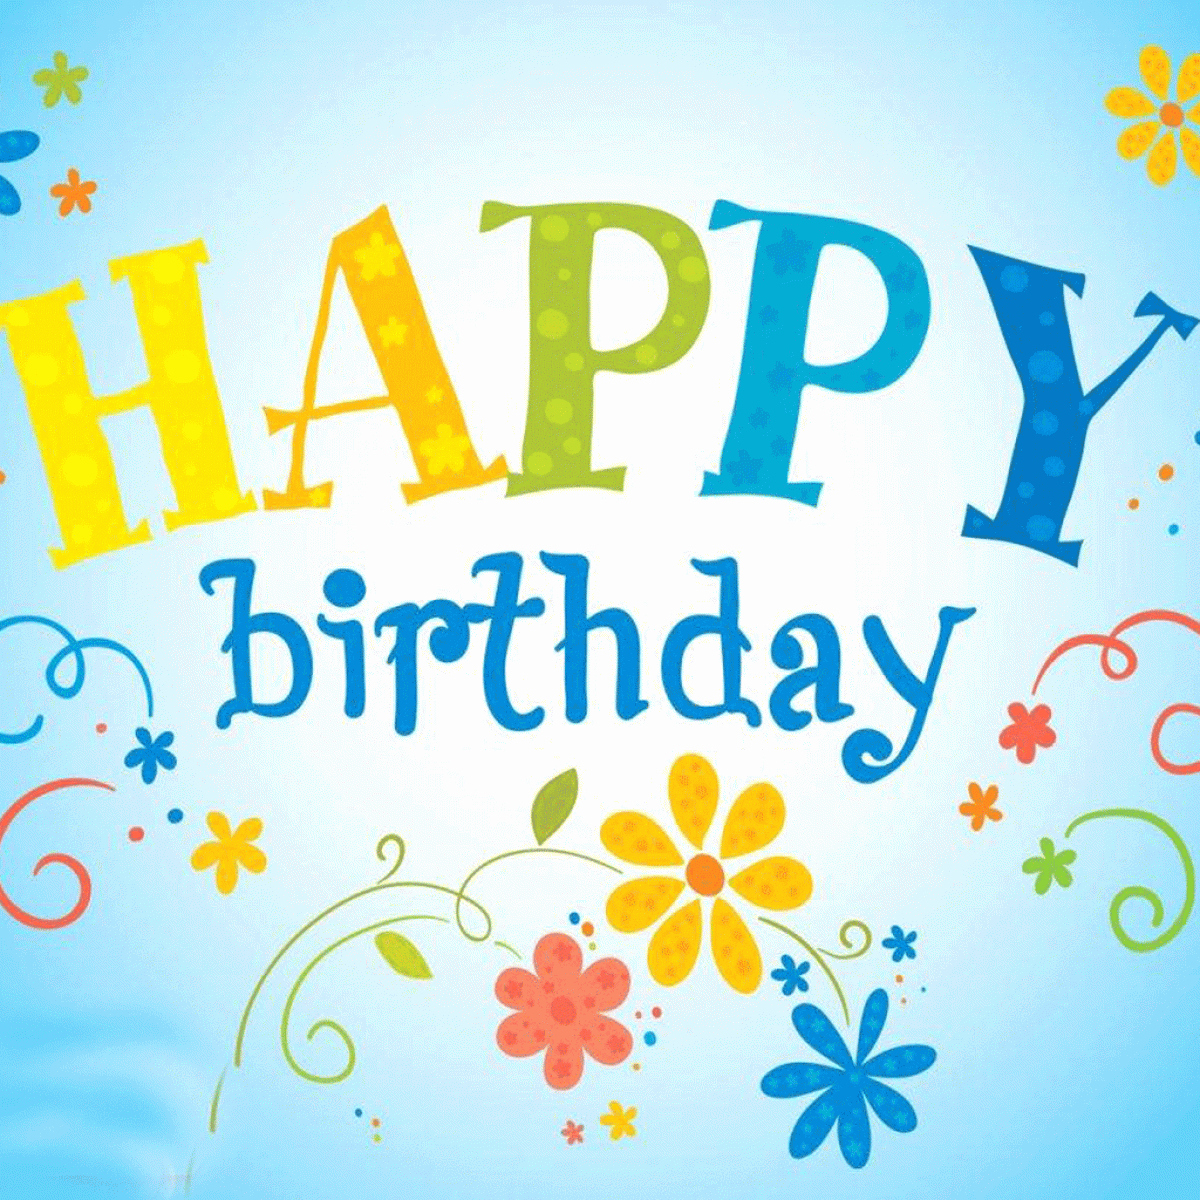 Birthday Cards Design Ideas Free Birthday Cards For Email Lovely Email Birthday Cards 1 Card